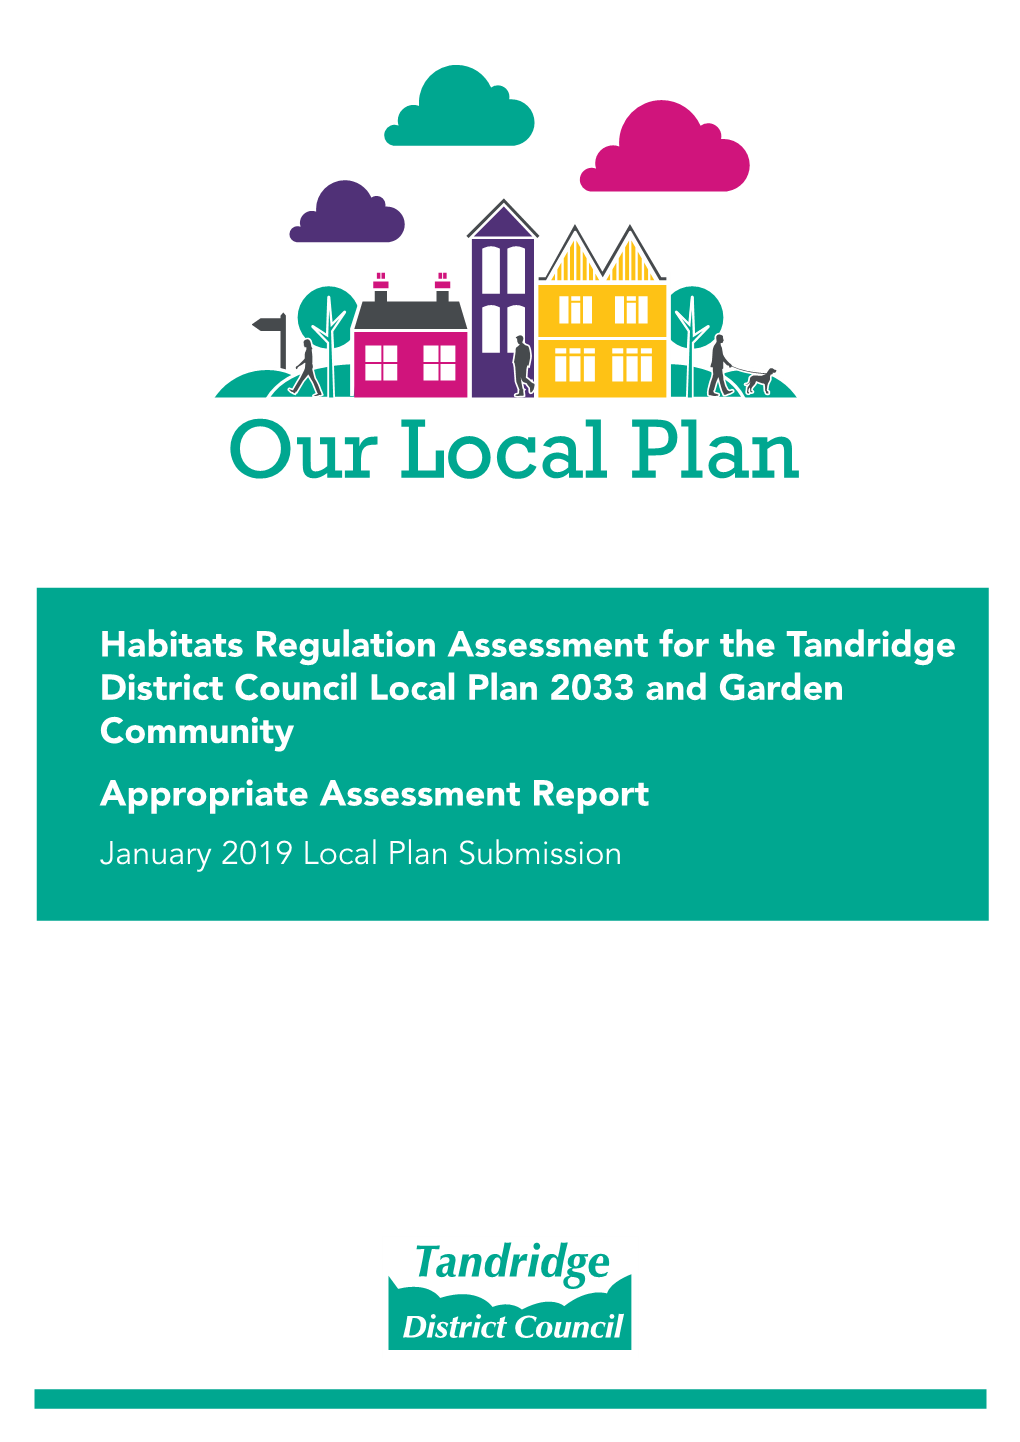 Habitats Regulation Assessment for the Tandridge Local Plan 2033 And